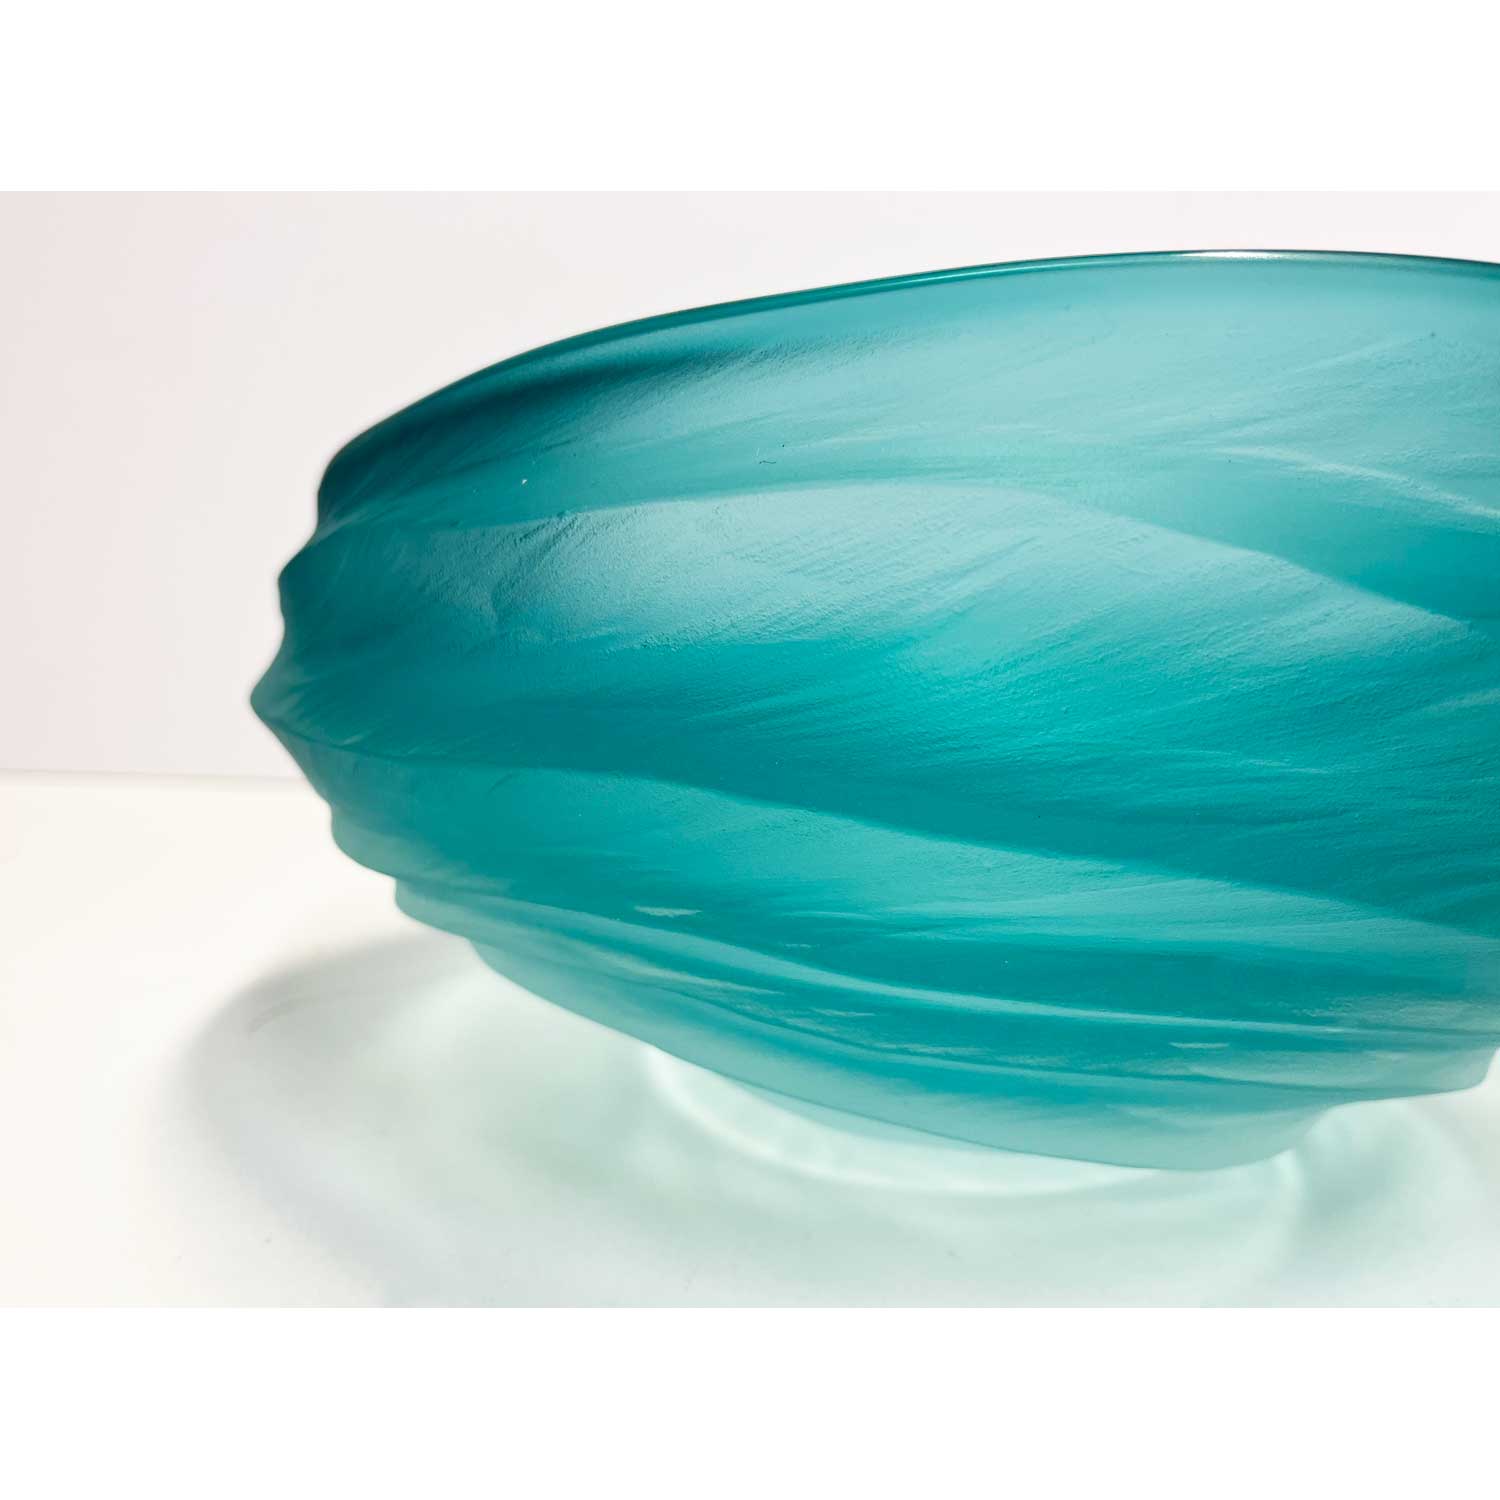 Brad Copping - Turquoise Undula Bowl, 5" x 10.5" x 8.5"